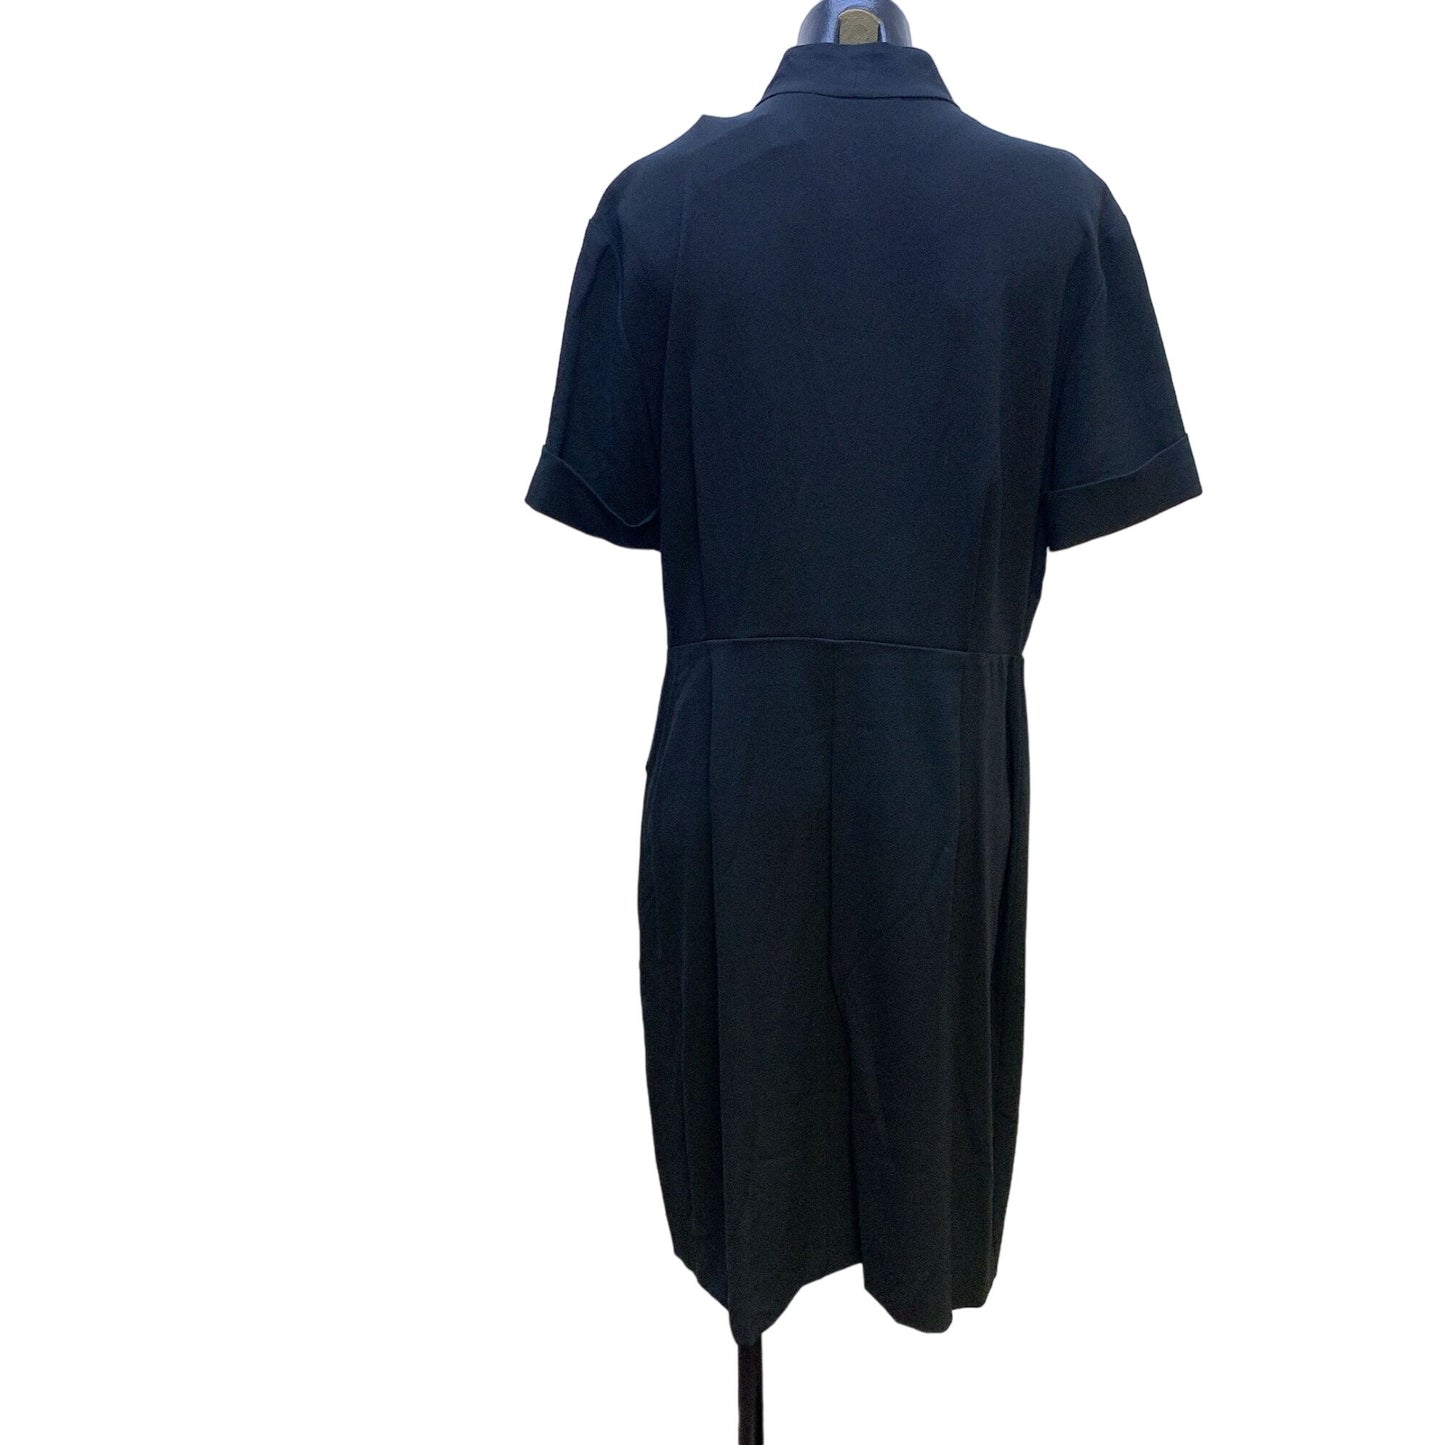 M. M. LaFleur New W/Tags Black V-neck Dress Size 14